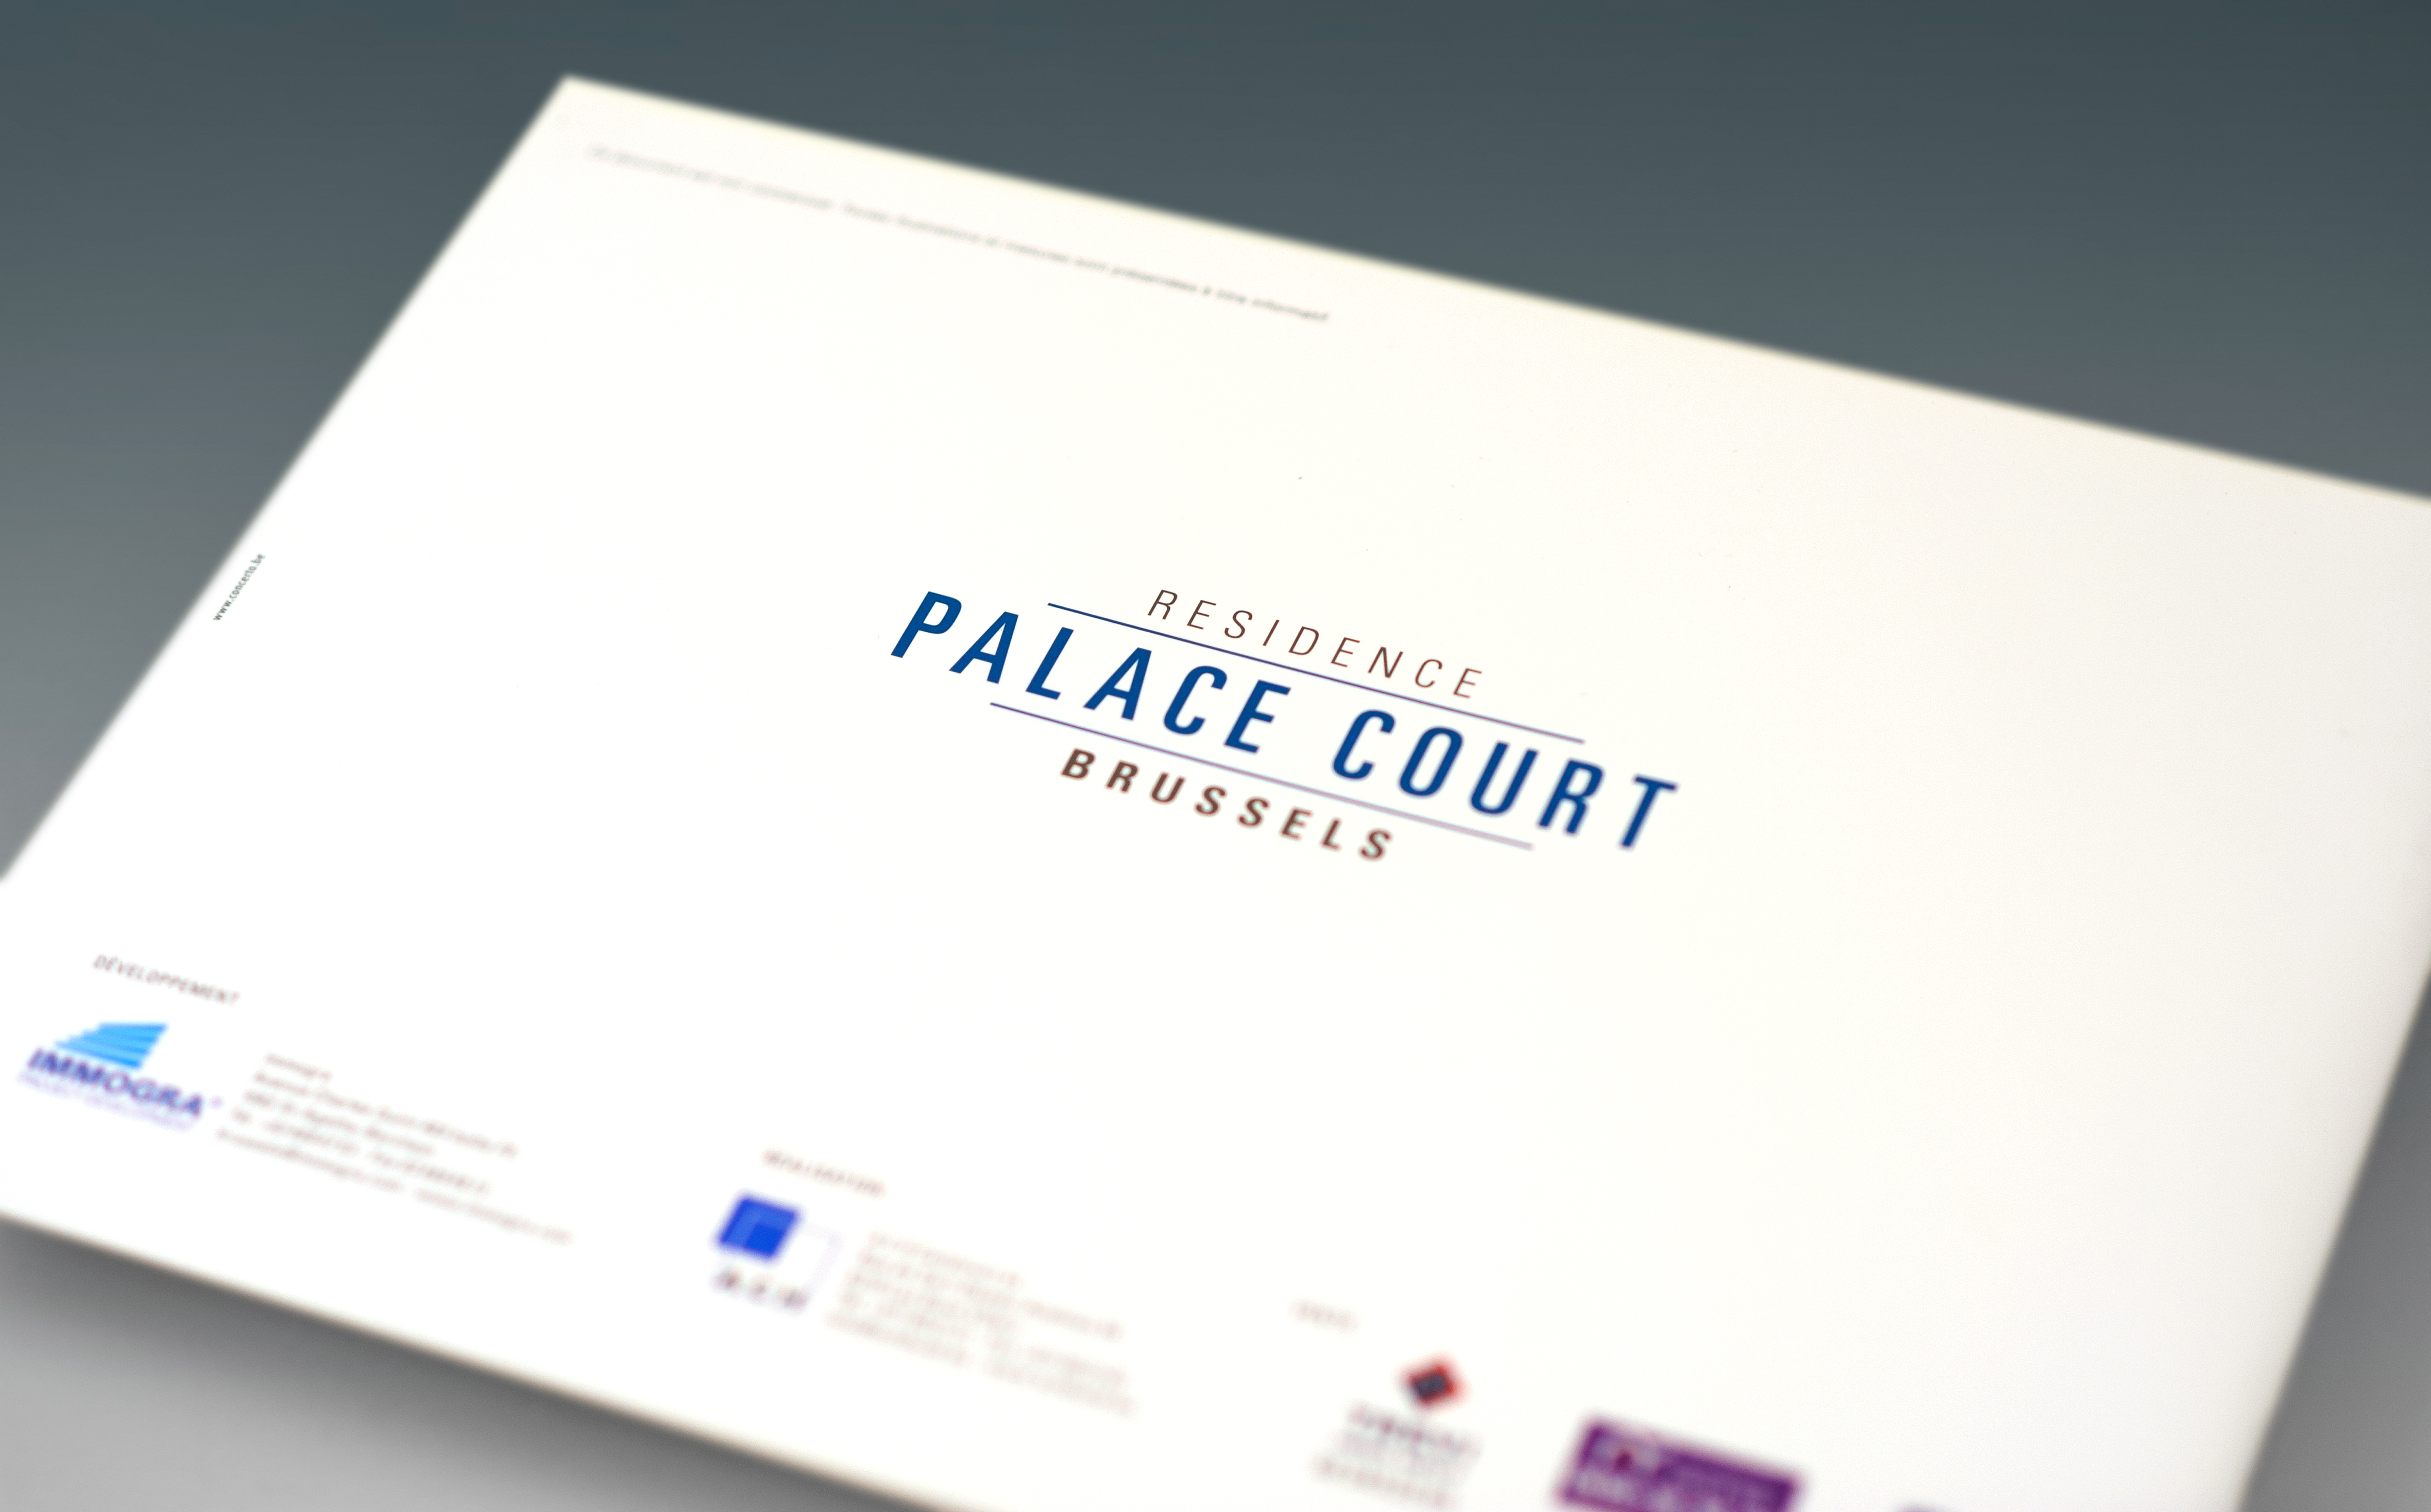 Identity - Palace Court